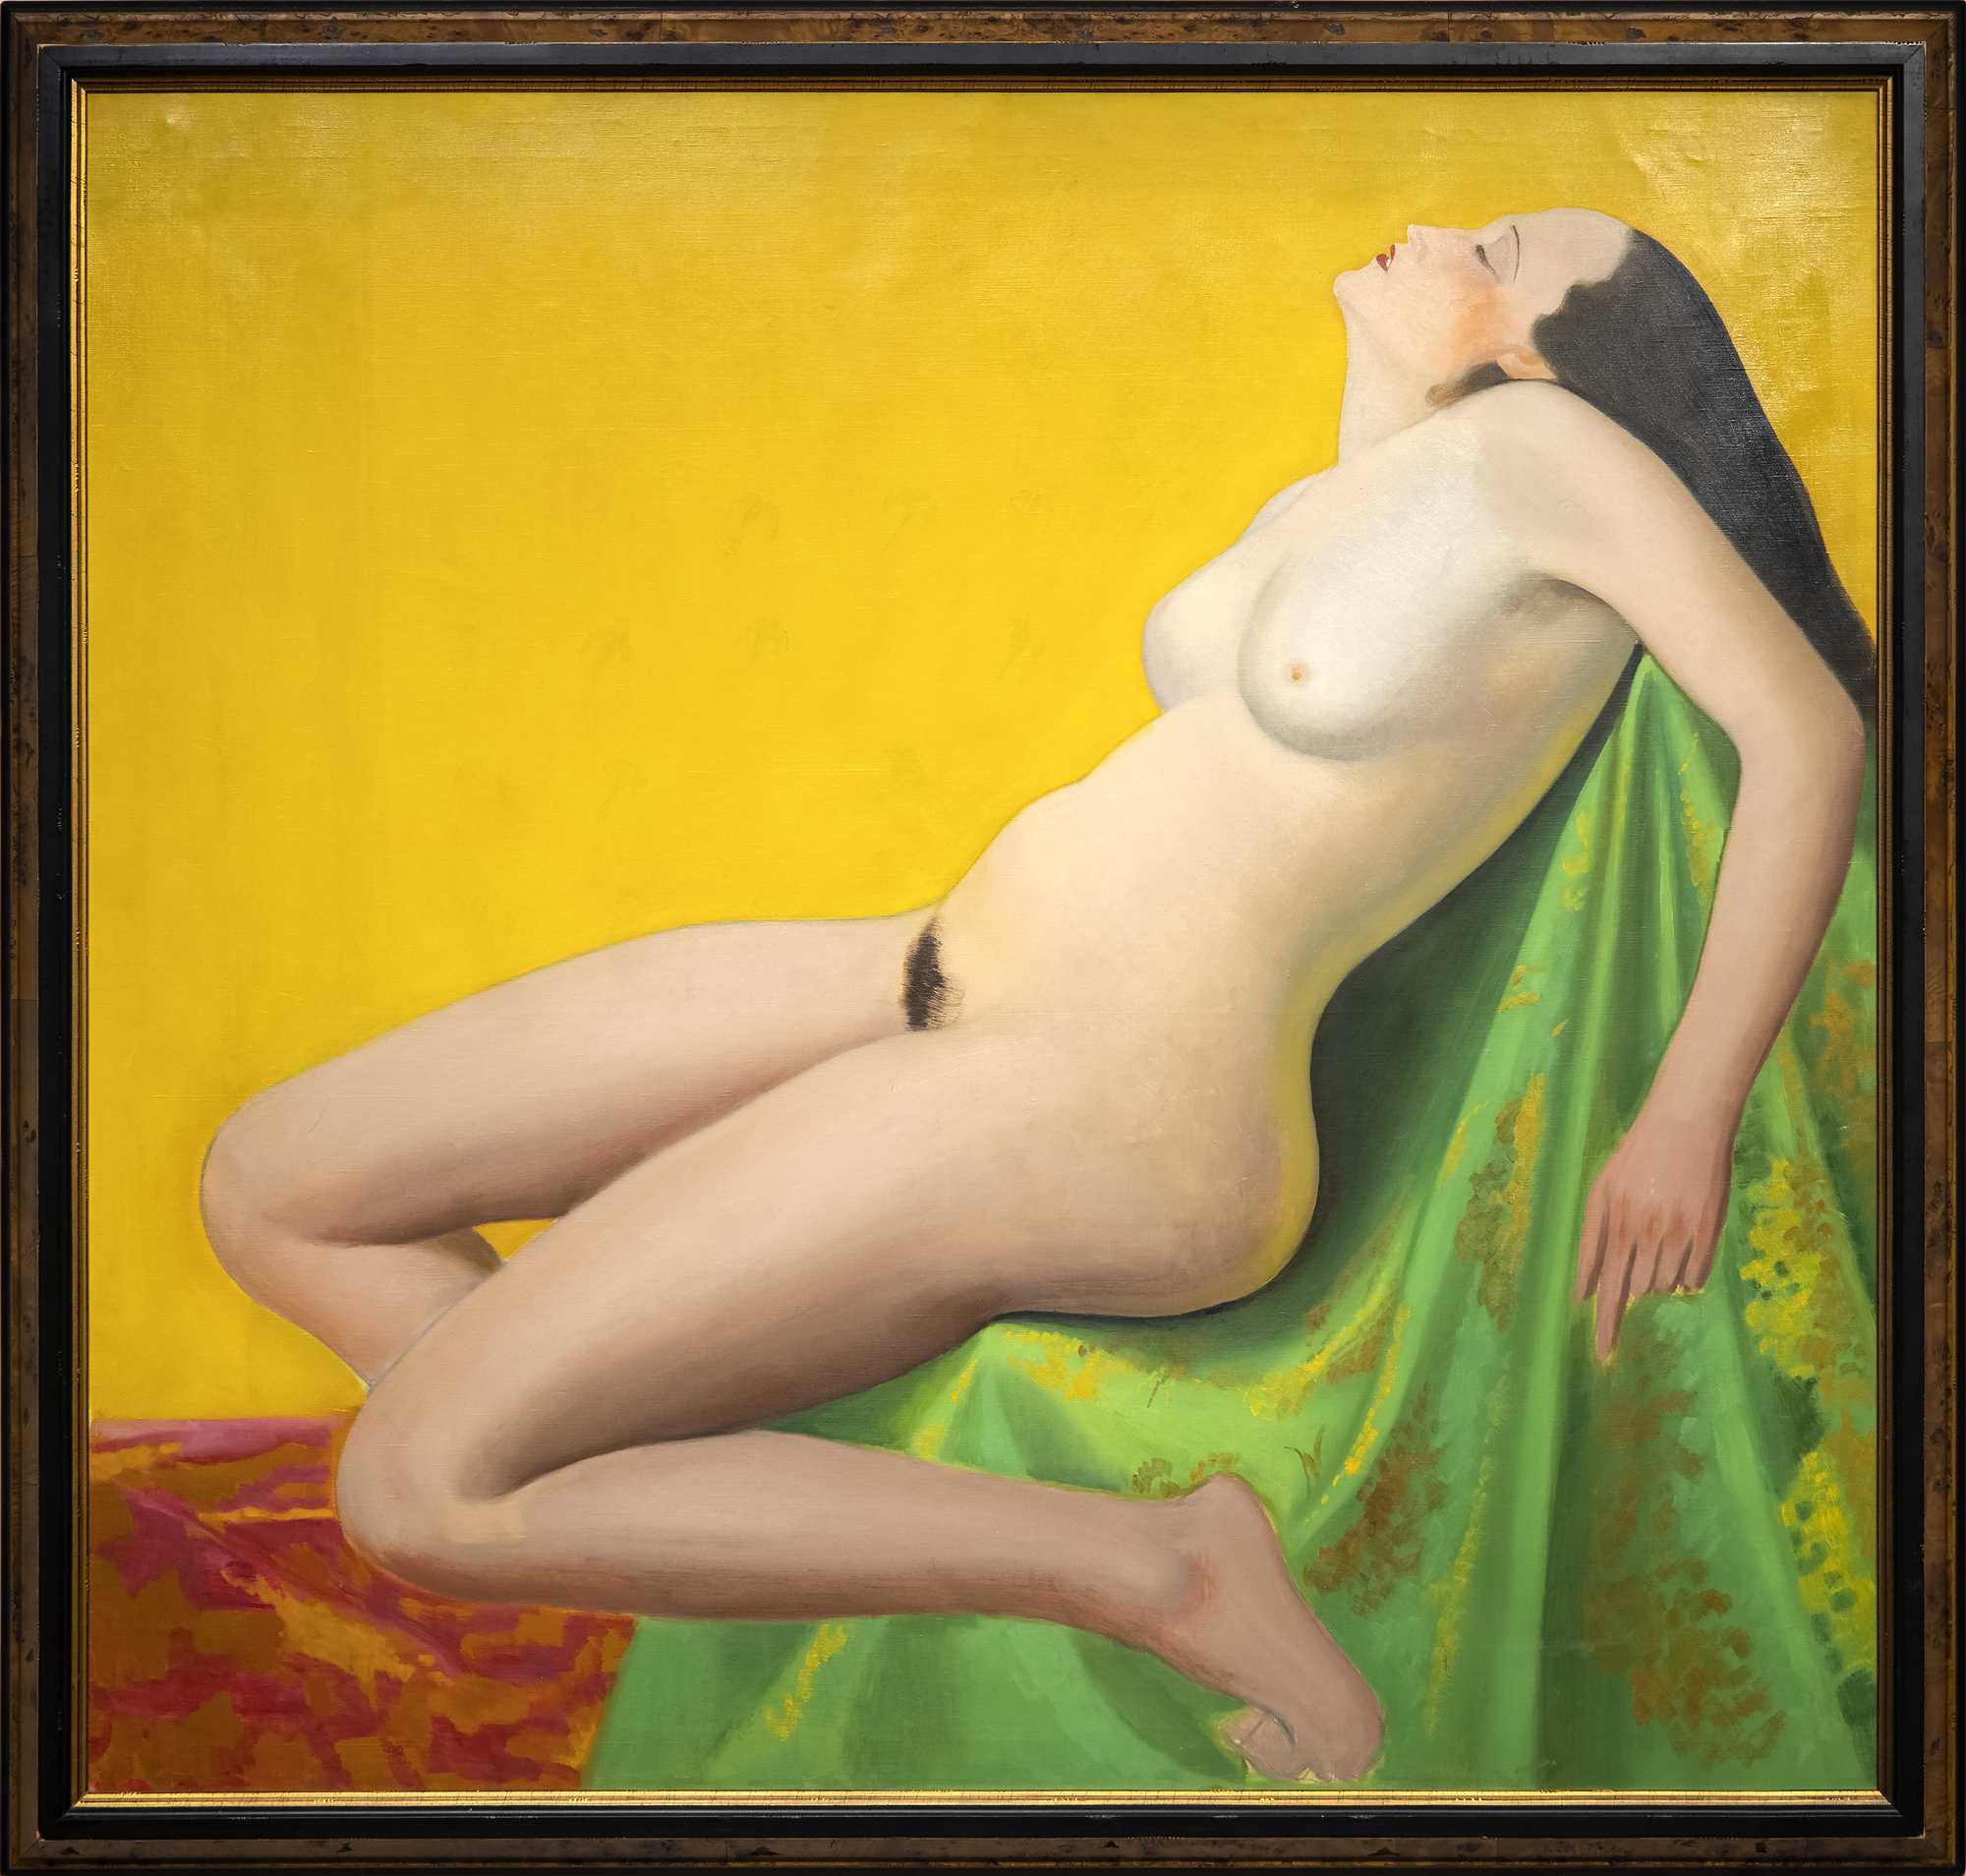 JOSEPH STELLA - Desnudo Reclinado - óleo sobre lienzo - 50 x 52 1/2 in.